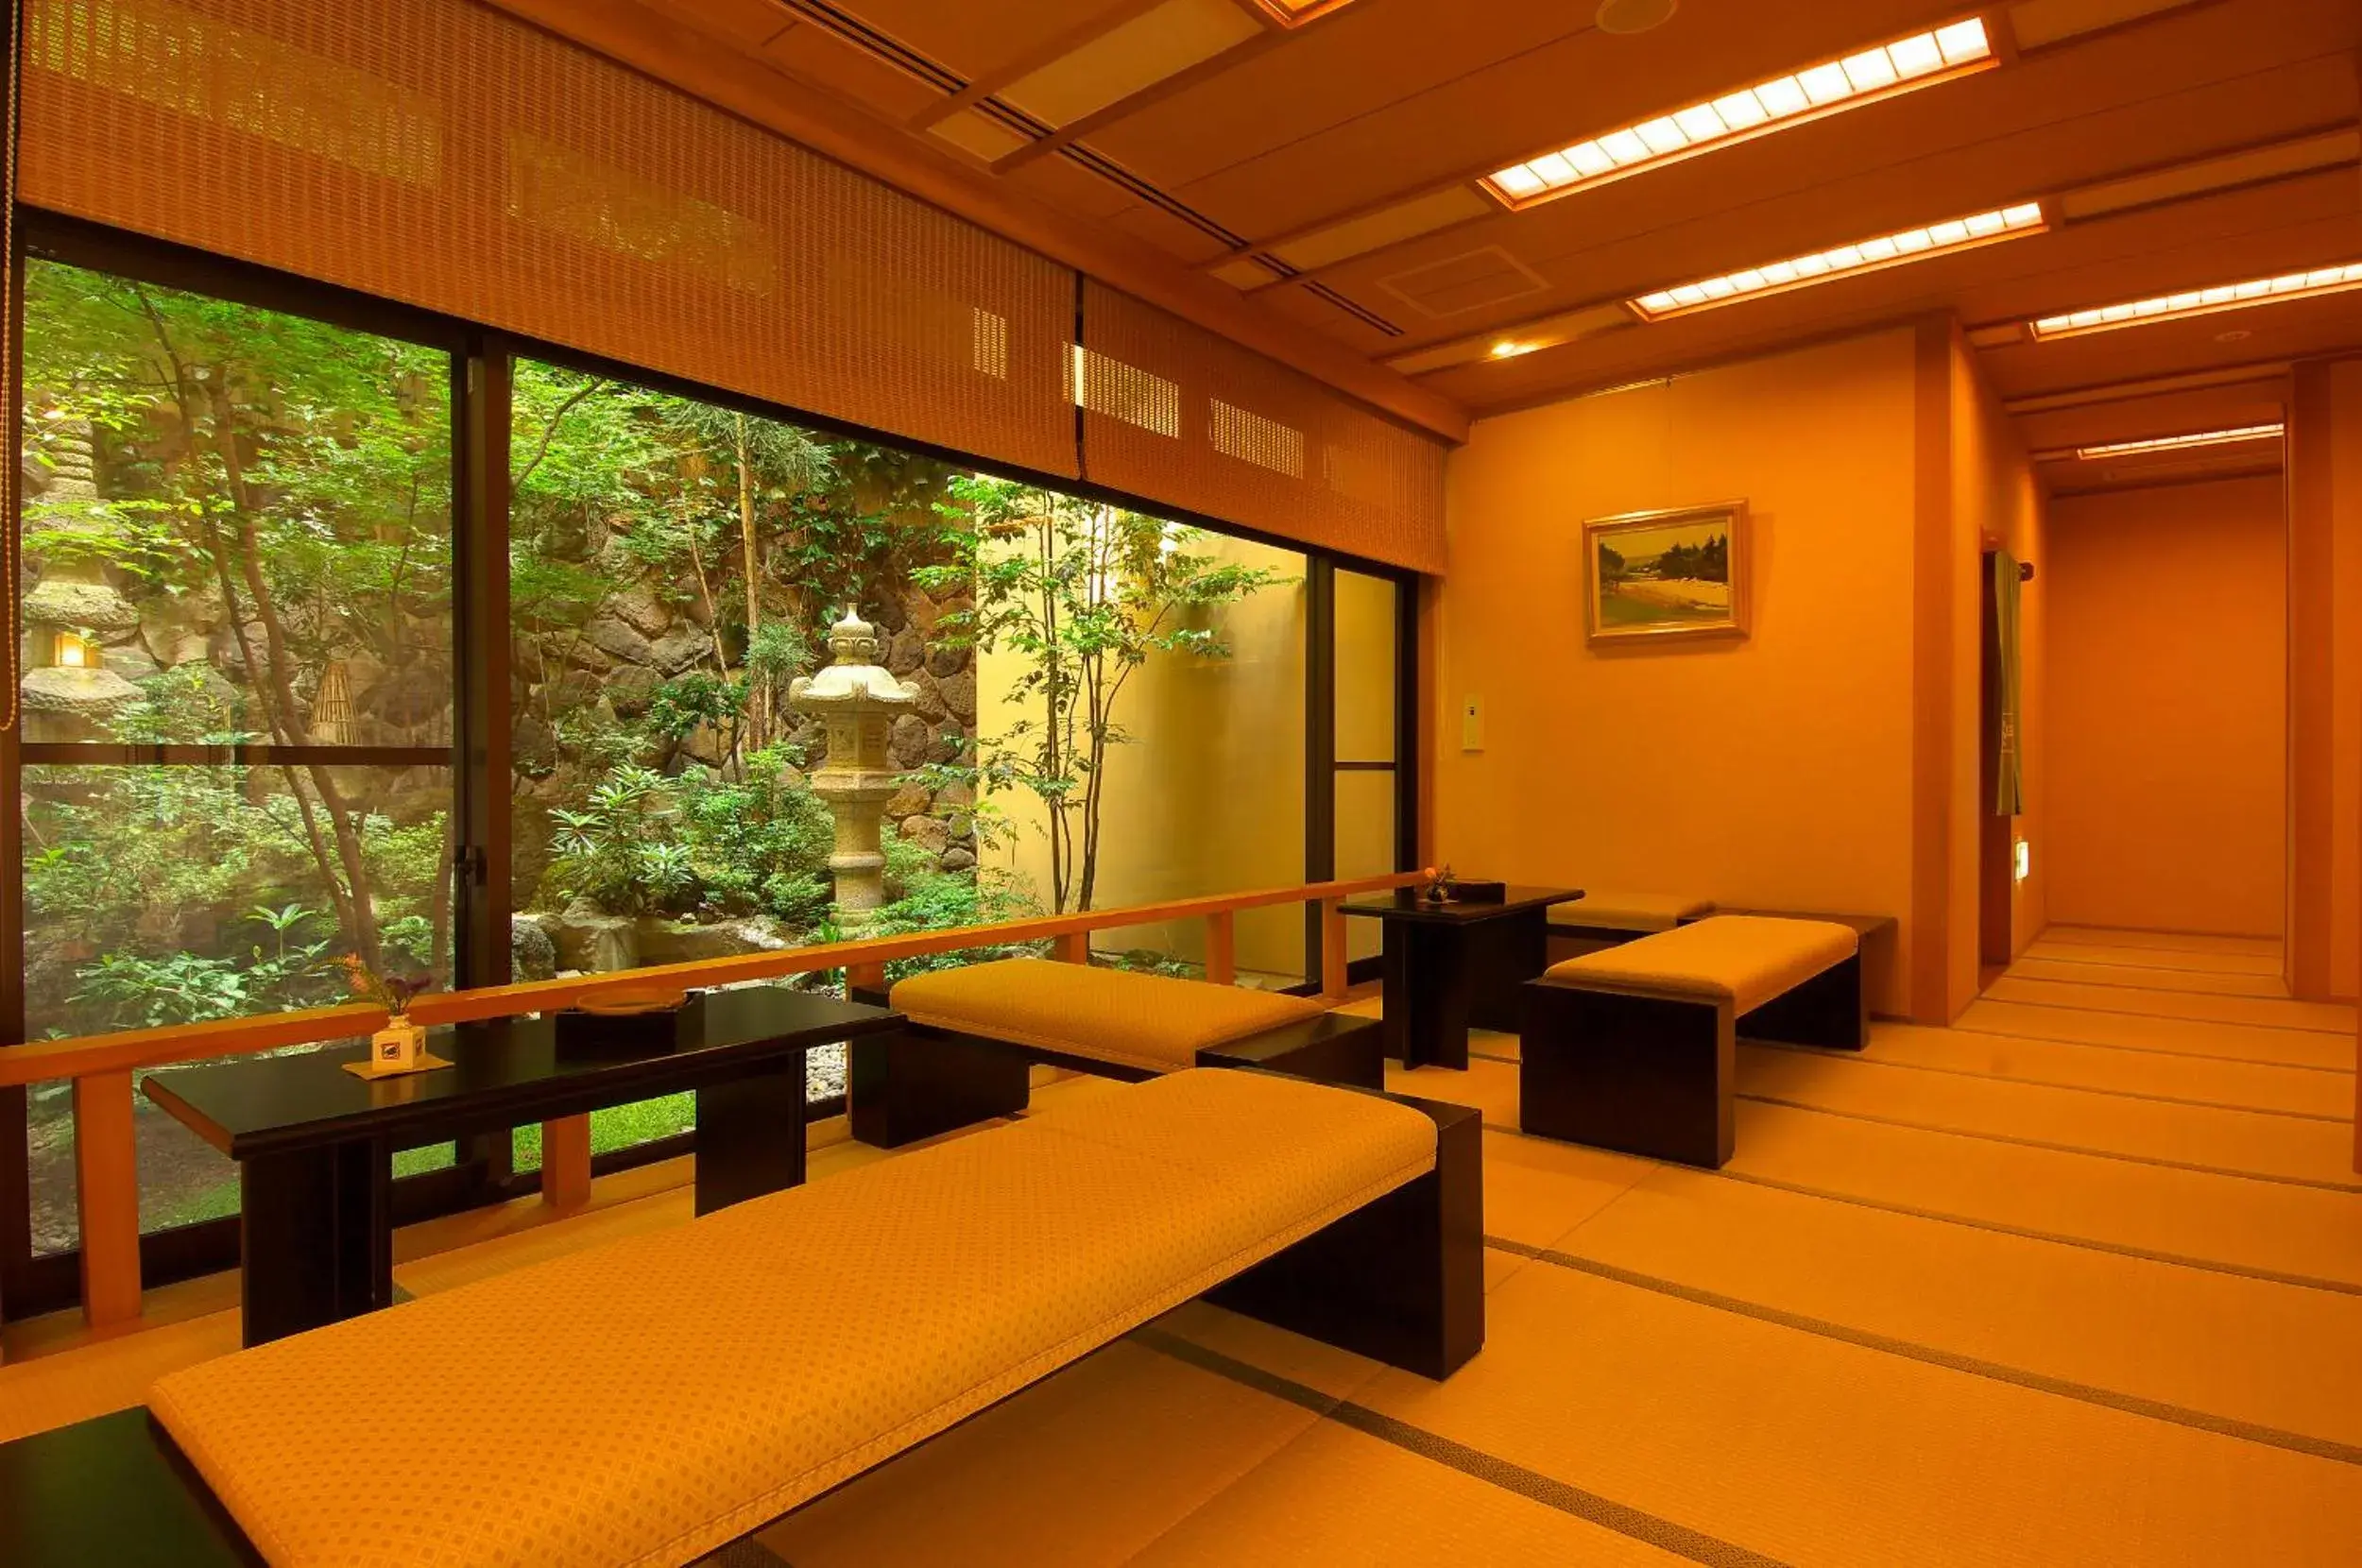 Lobby or reception in Ichinoyu Katei